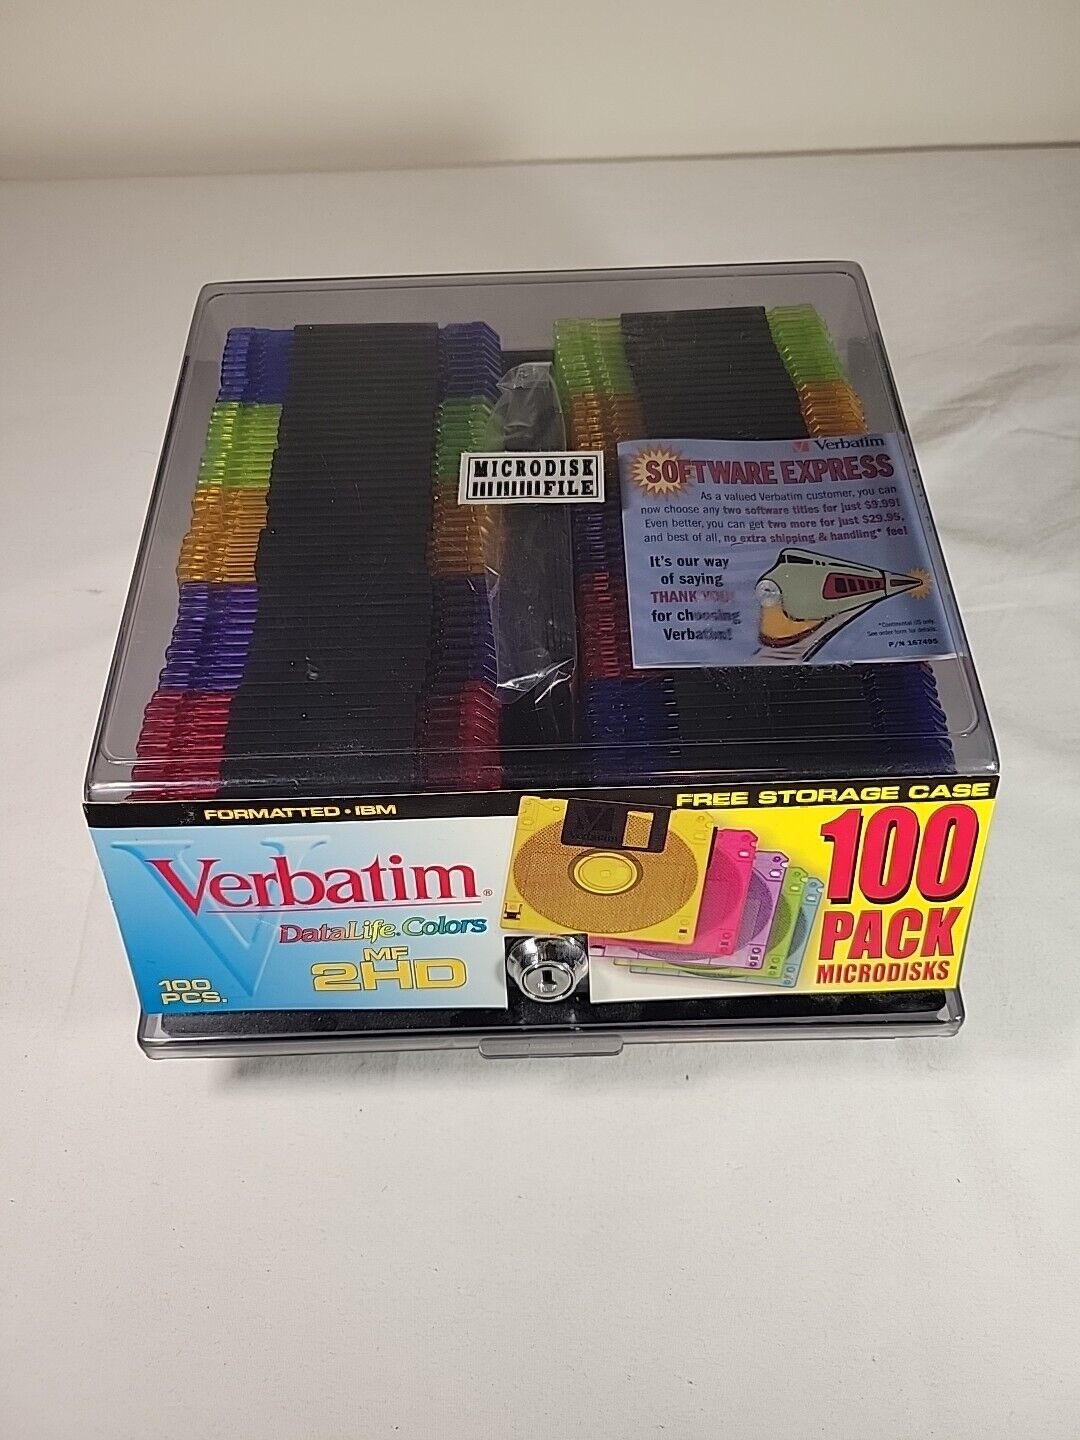 Verbatim DataLife Colors / MF 2HD / IBM Microdisks / Storage Case / 100 Pack